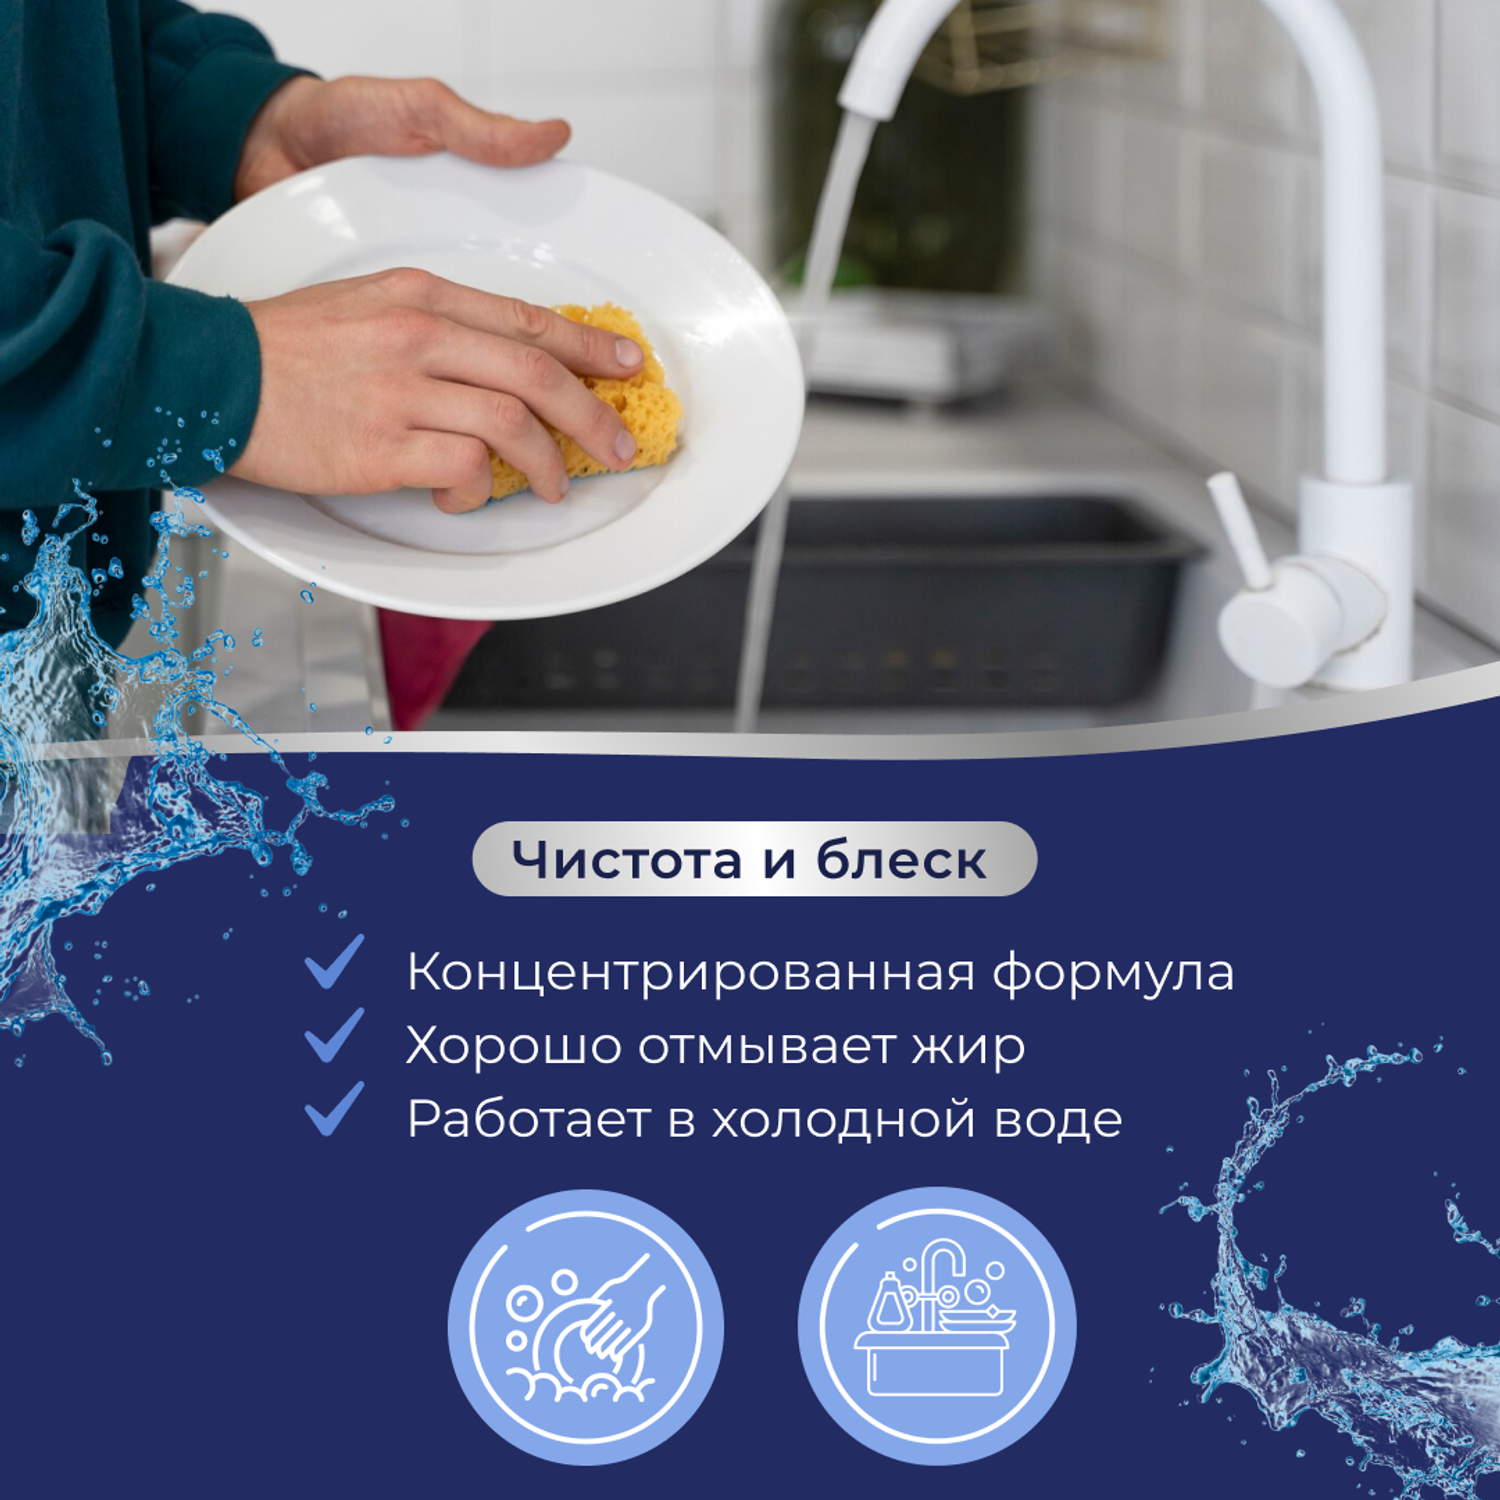 Средство для мытья посуды MARABU dolomit сицилийский цитрус 1.5 л - фото 5